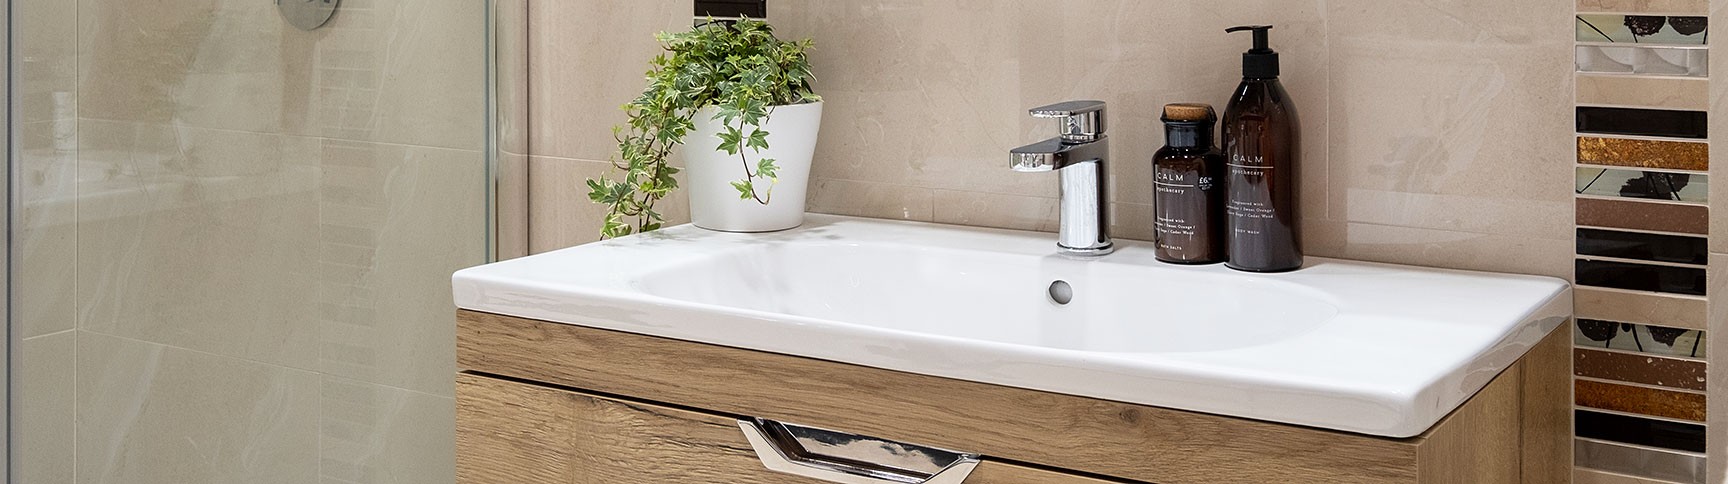 Buy Quality Taps | World of Tiles, Bathrooms & Wood Flooring